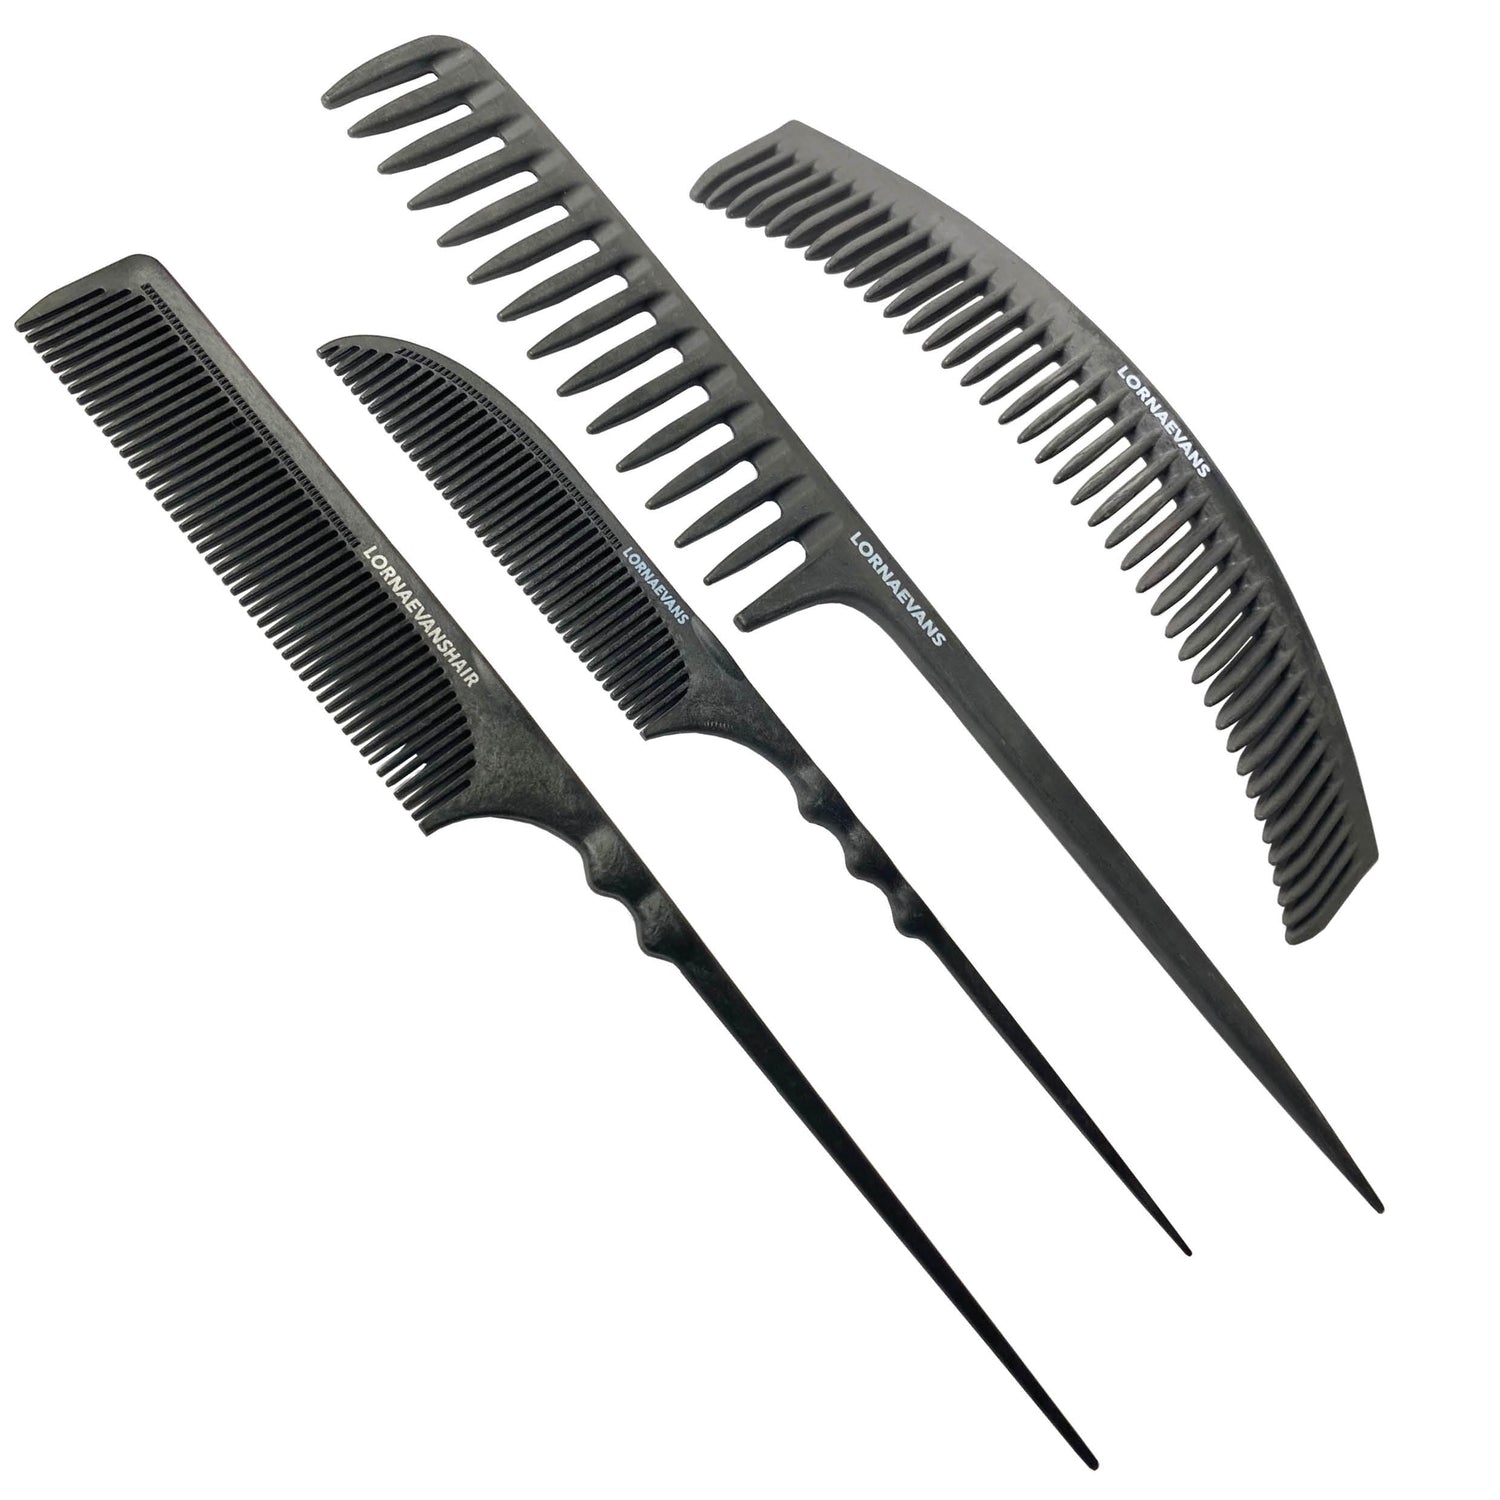 Four Comb Set